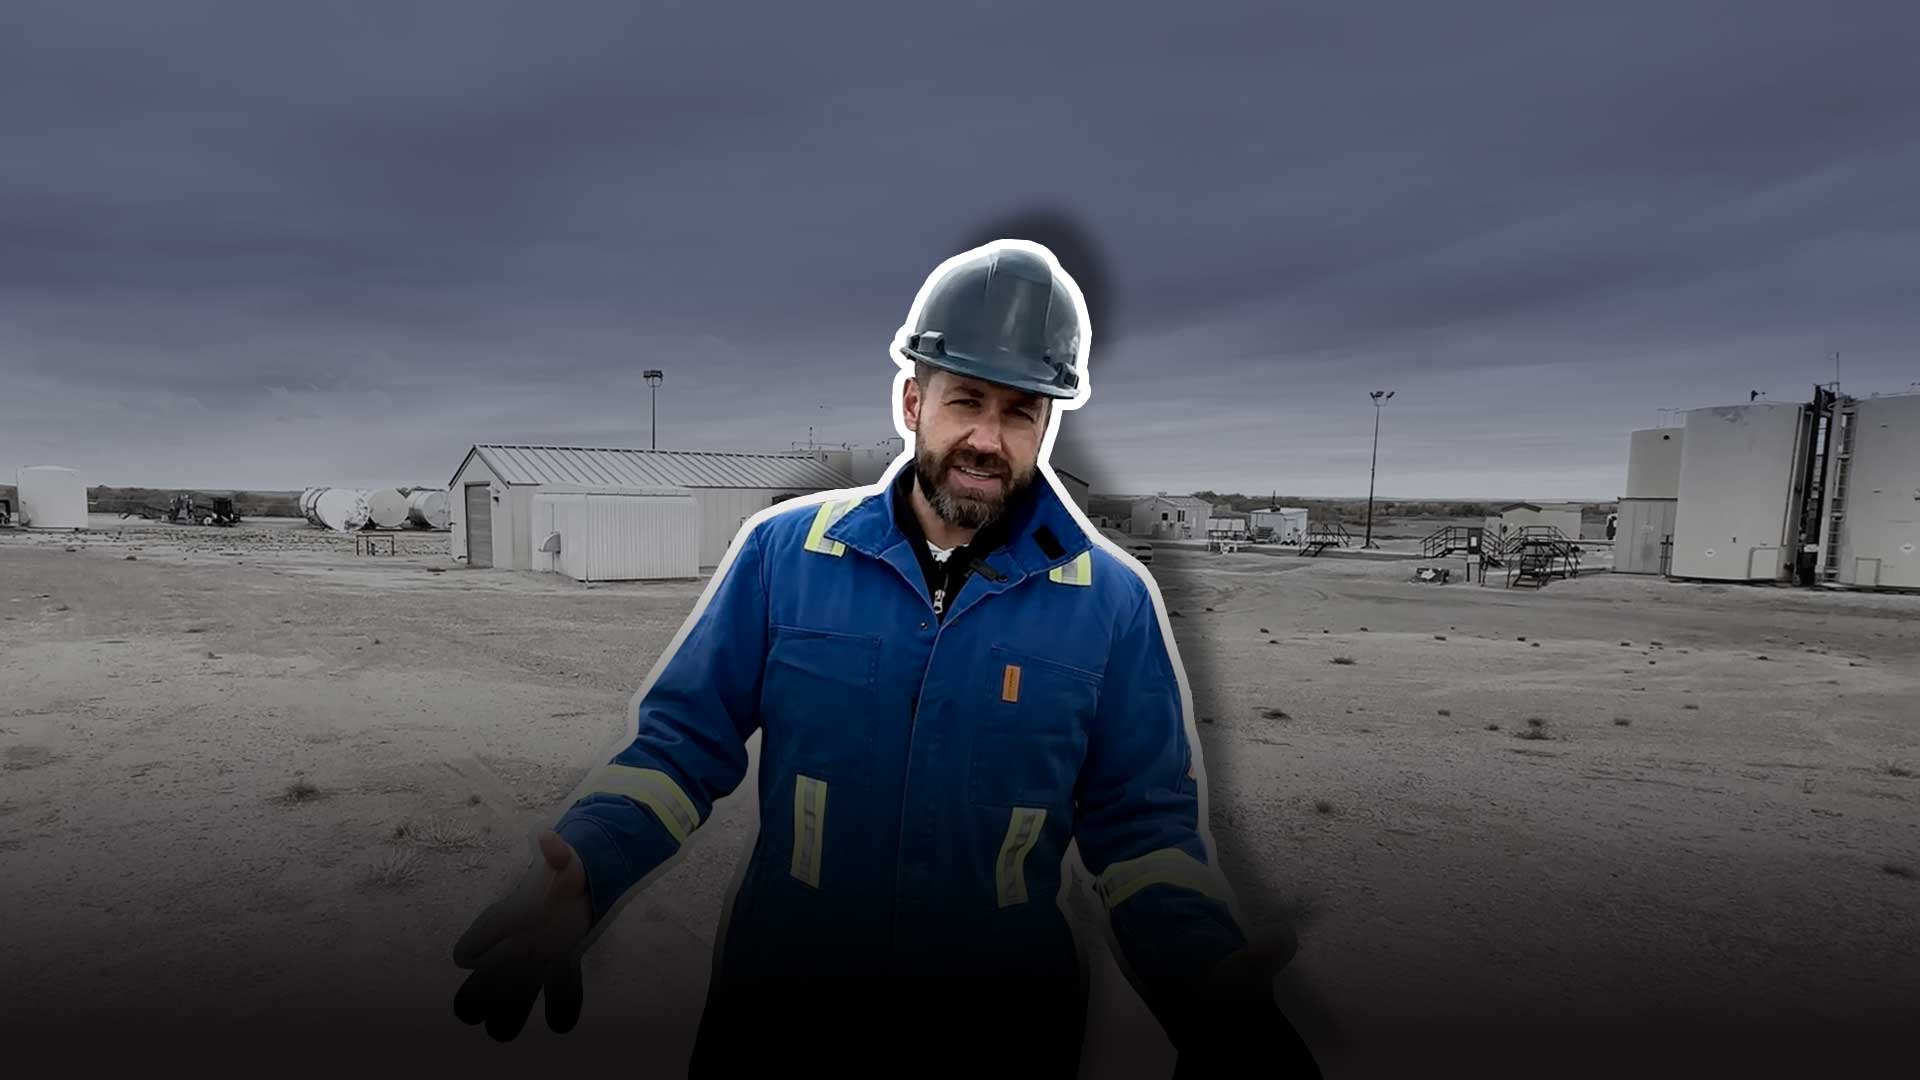 Oilfield Oil & Gas Equipment Boneyard – Equipment Resale, Removal & Redeployment in Alberta